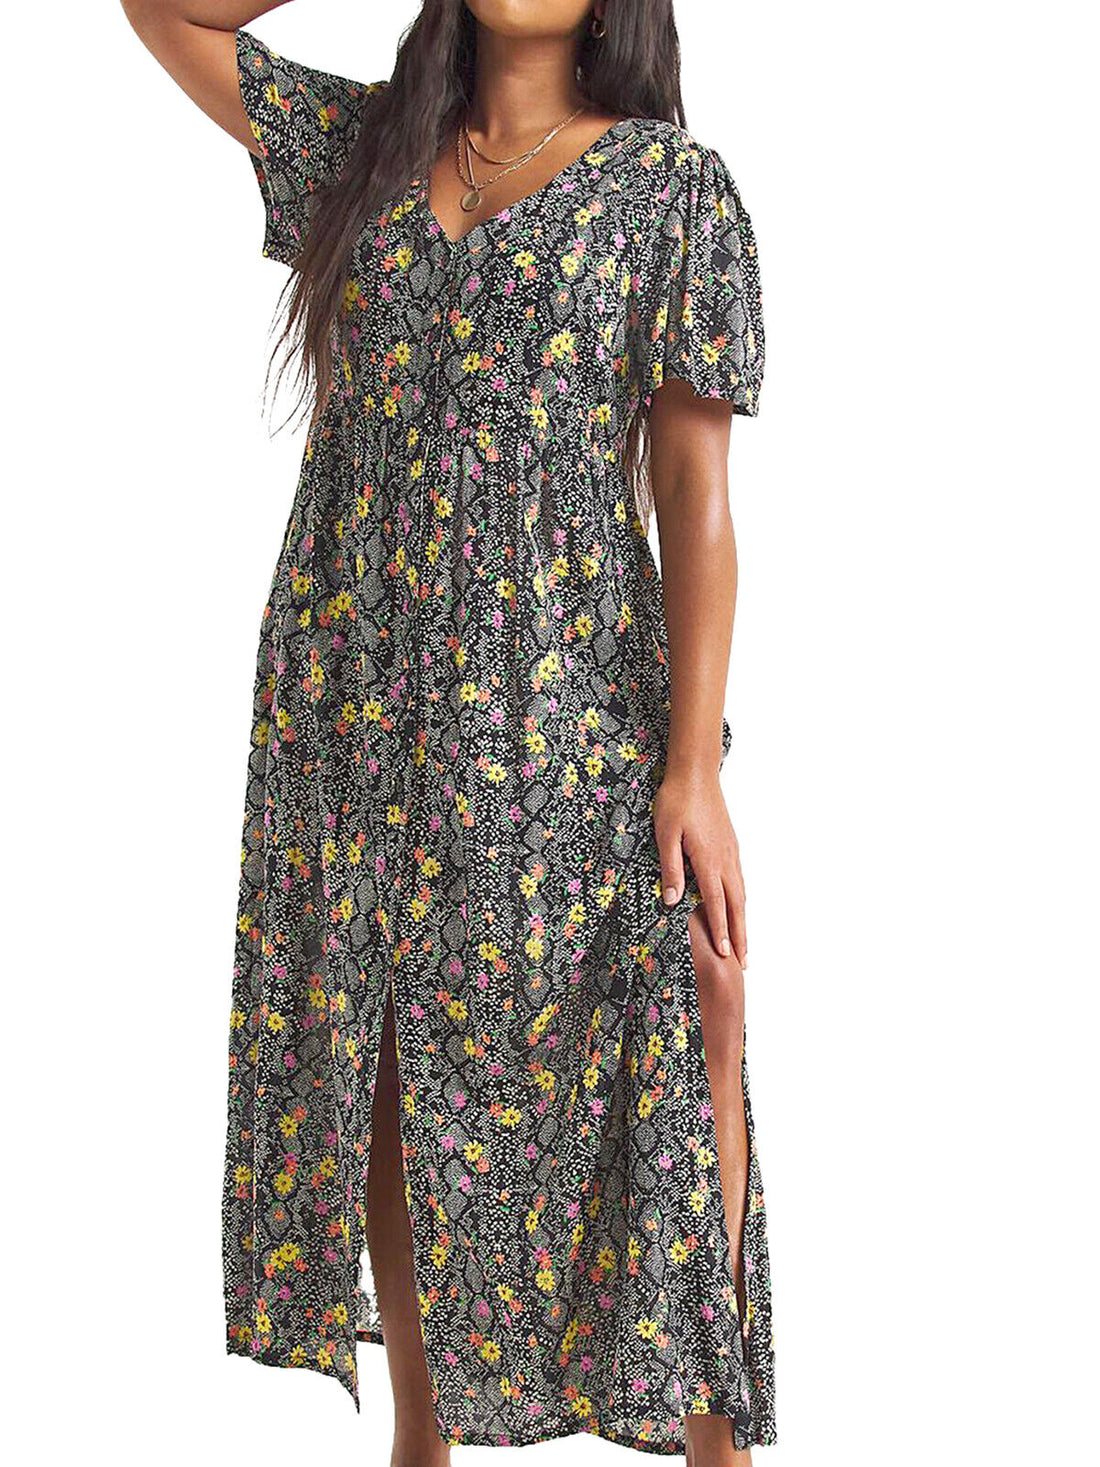 Simply Be Black Floral Print Button Through Tea Dress Sizes 20, 22, 24, 26, 28